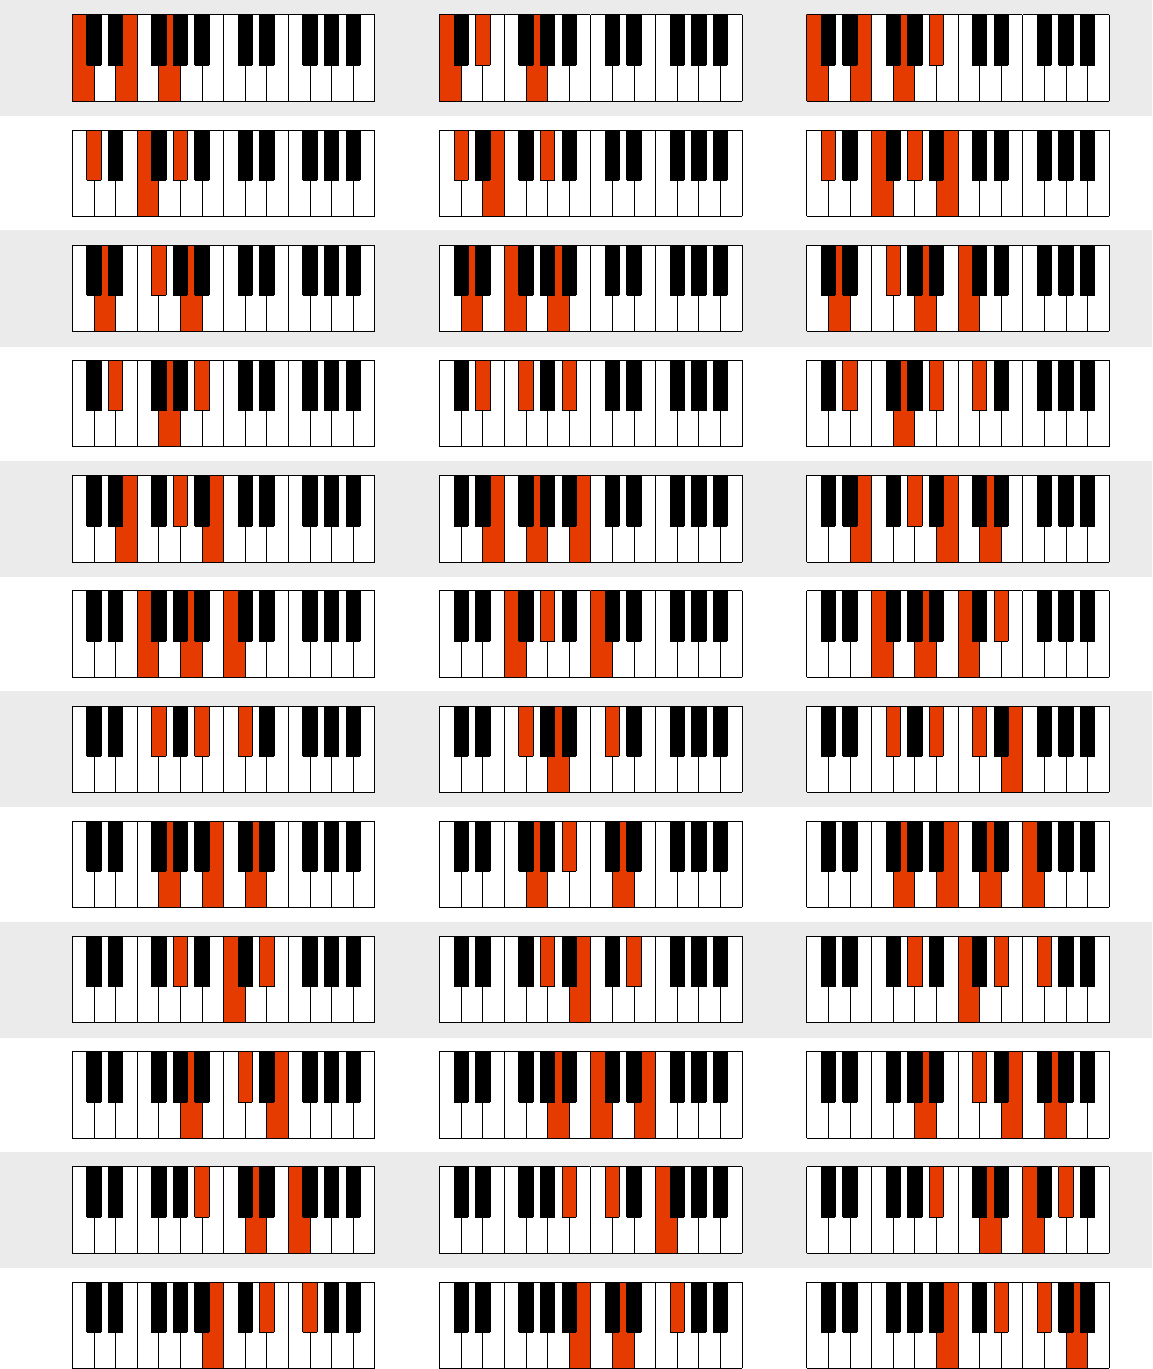 Аккорды пианино таблица. Таблица аккордов для синтезатора Yamaha. Аккорд h7 на пианино. Таблица аккордов на синтезаторе Ямаха. Аккорд h7 на синтезаторе.